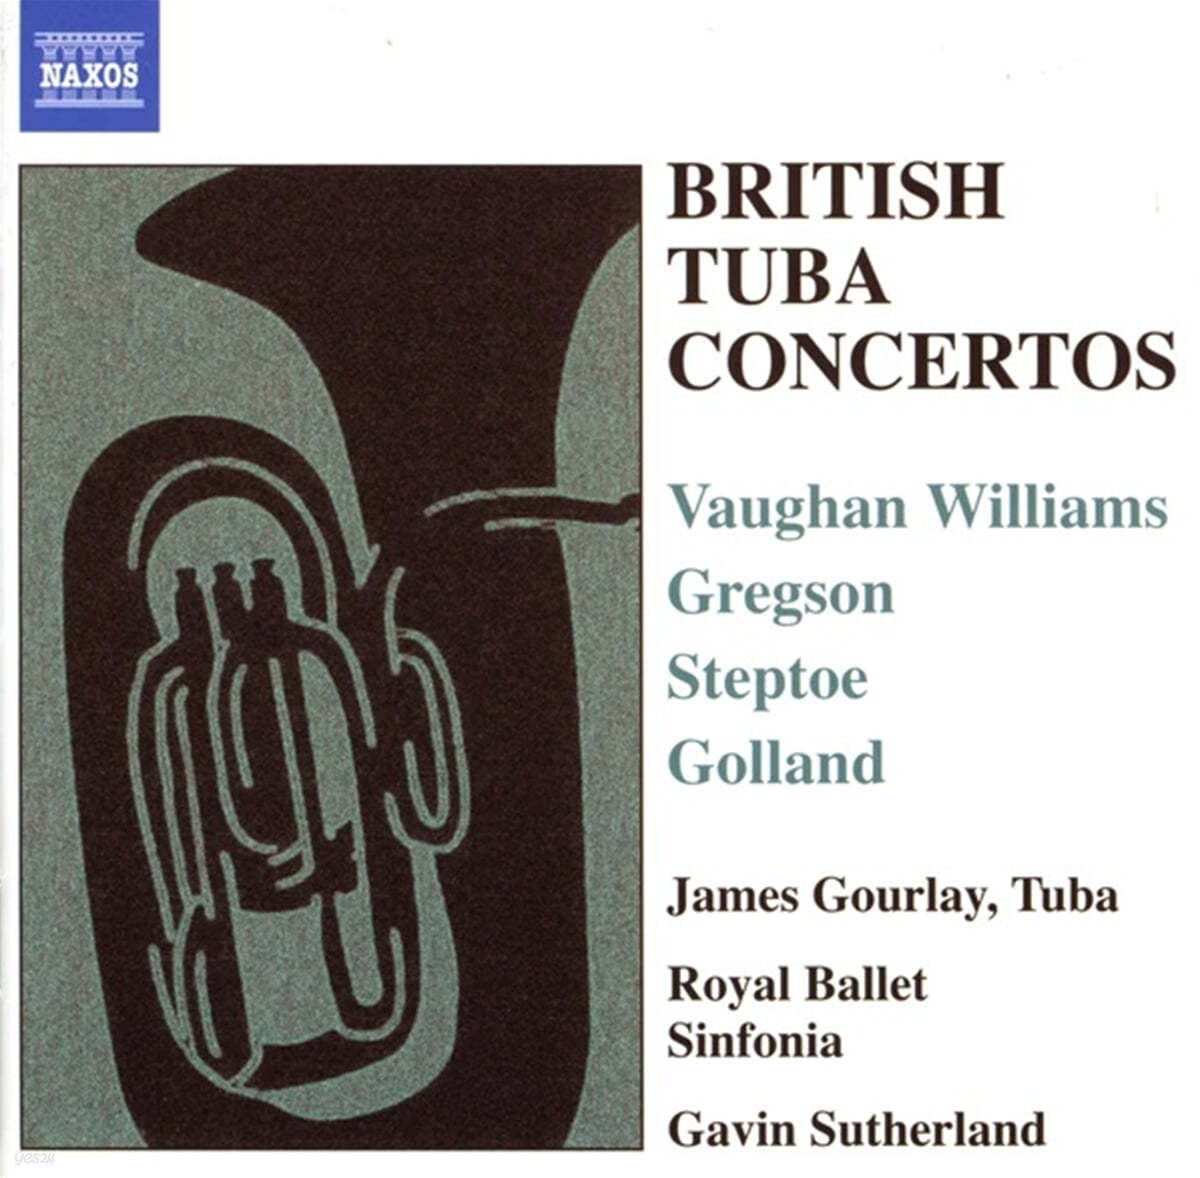 James Gourlay 본 윌리암스 / 스텝토 / 그렉슨 / 골란드: 영국 튜바 협주곡 (Vaughan Williams / Steptoe / Gregson / Golland: British Tuba Concertos) 